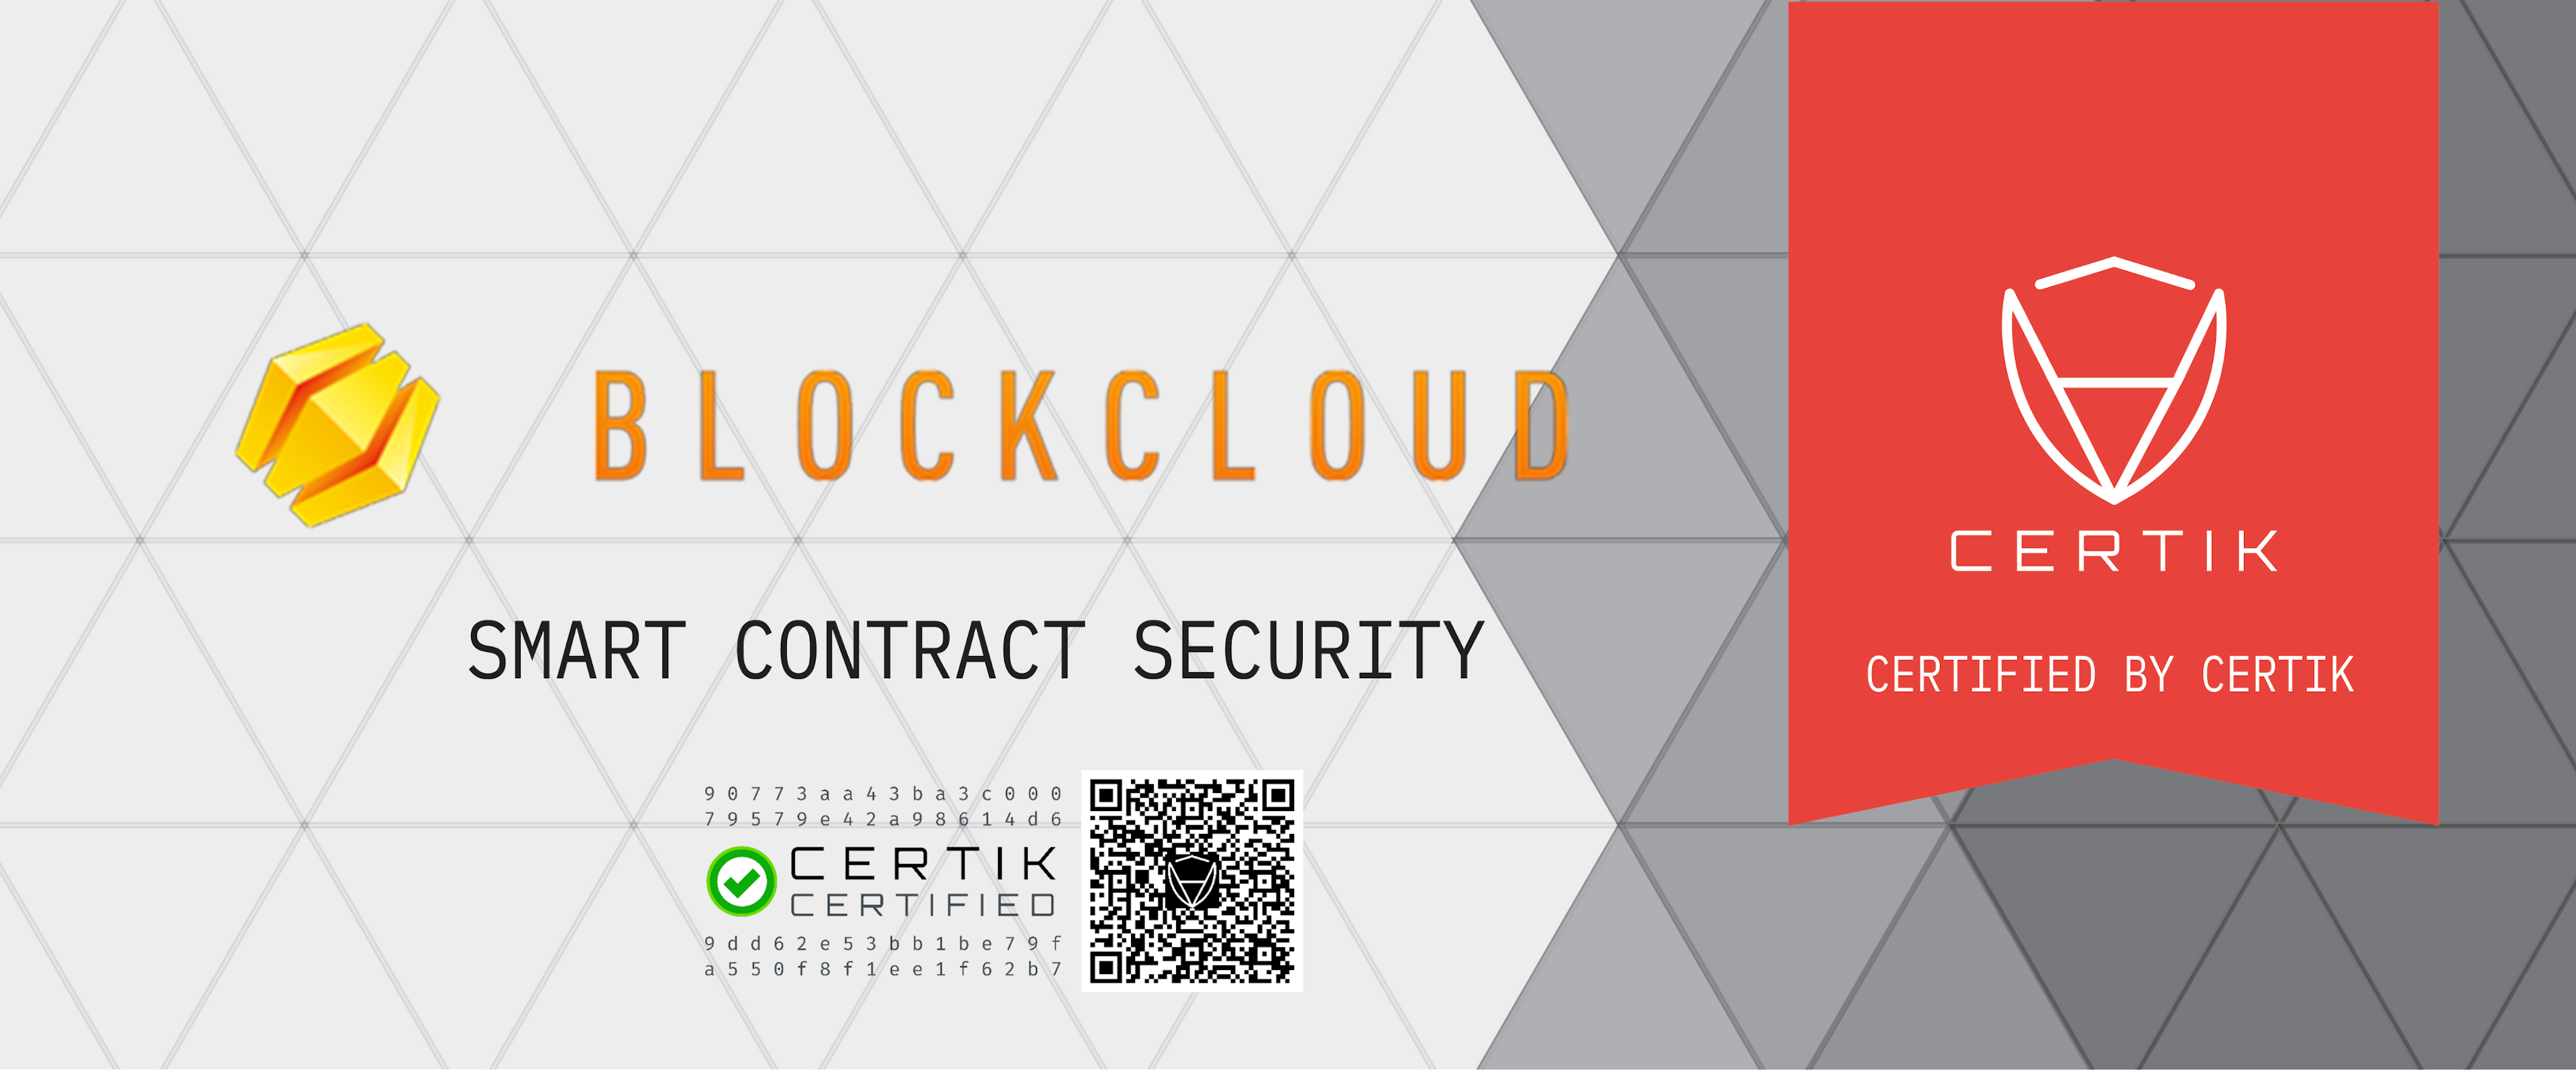 CertiK has secured Blockcloud's Smart Contract